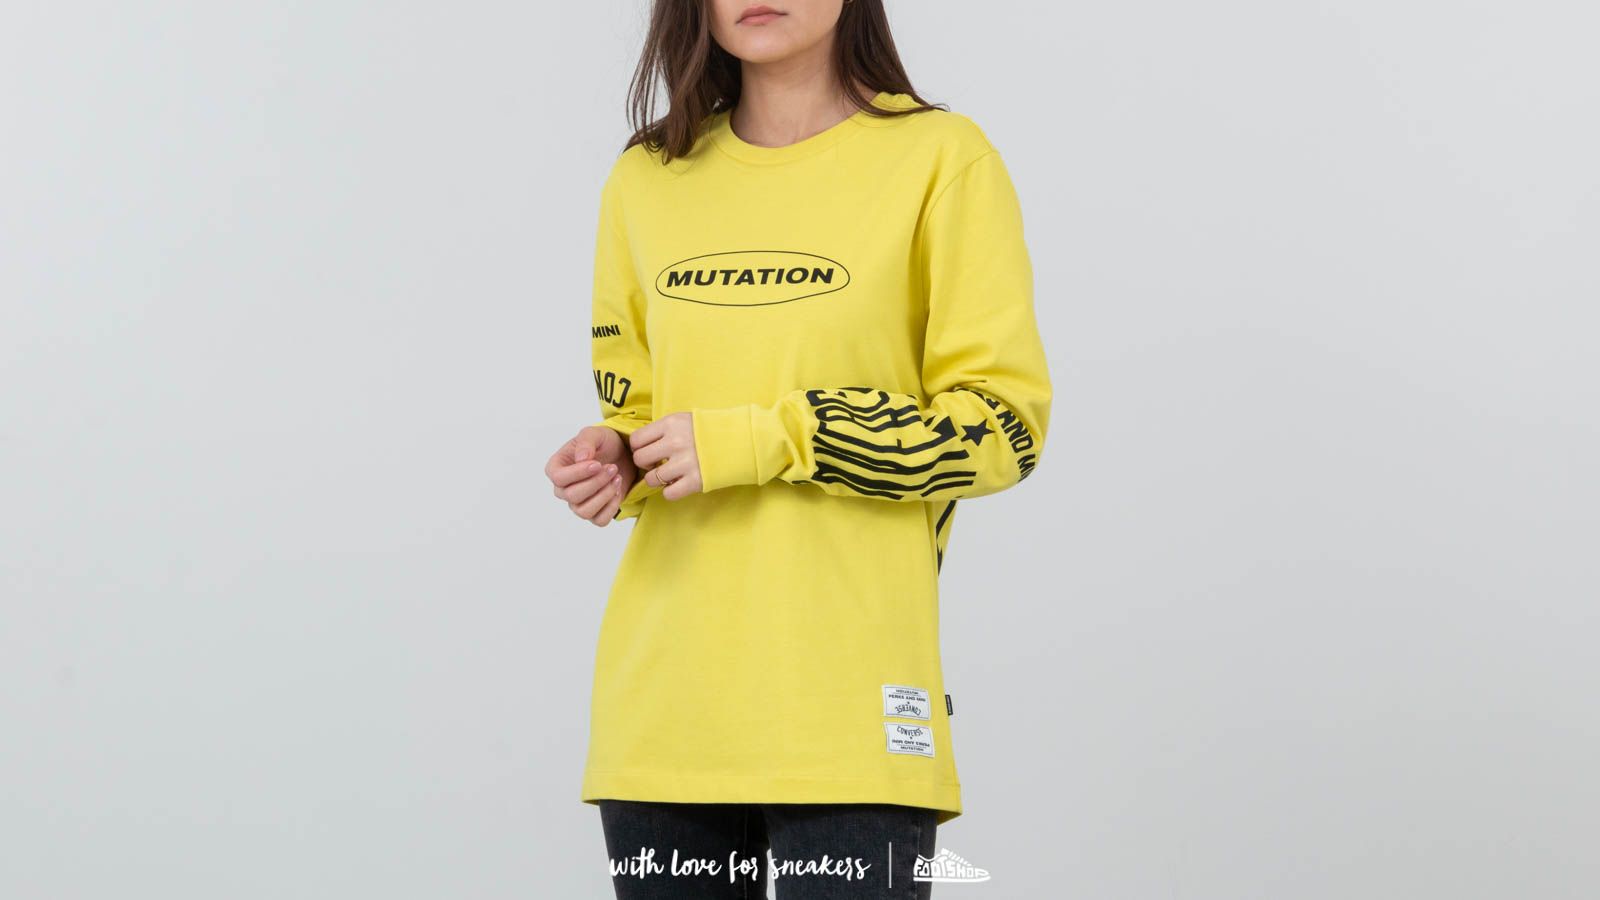 T-shirts Converse x Perks and Mini "Mutation" Longsleeve Tee Green Sheen